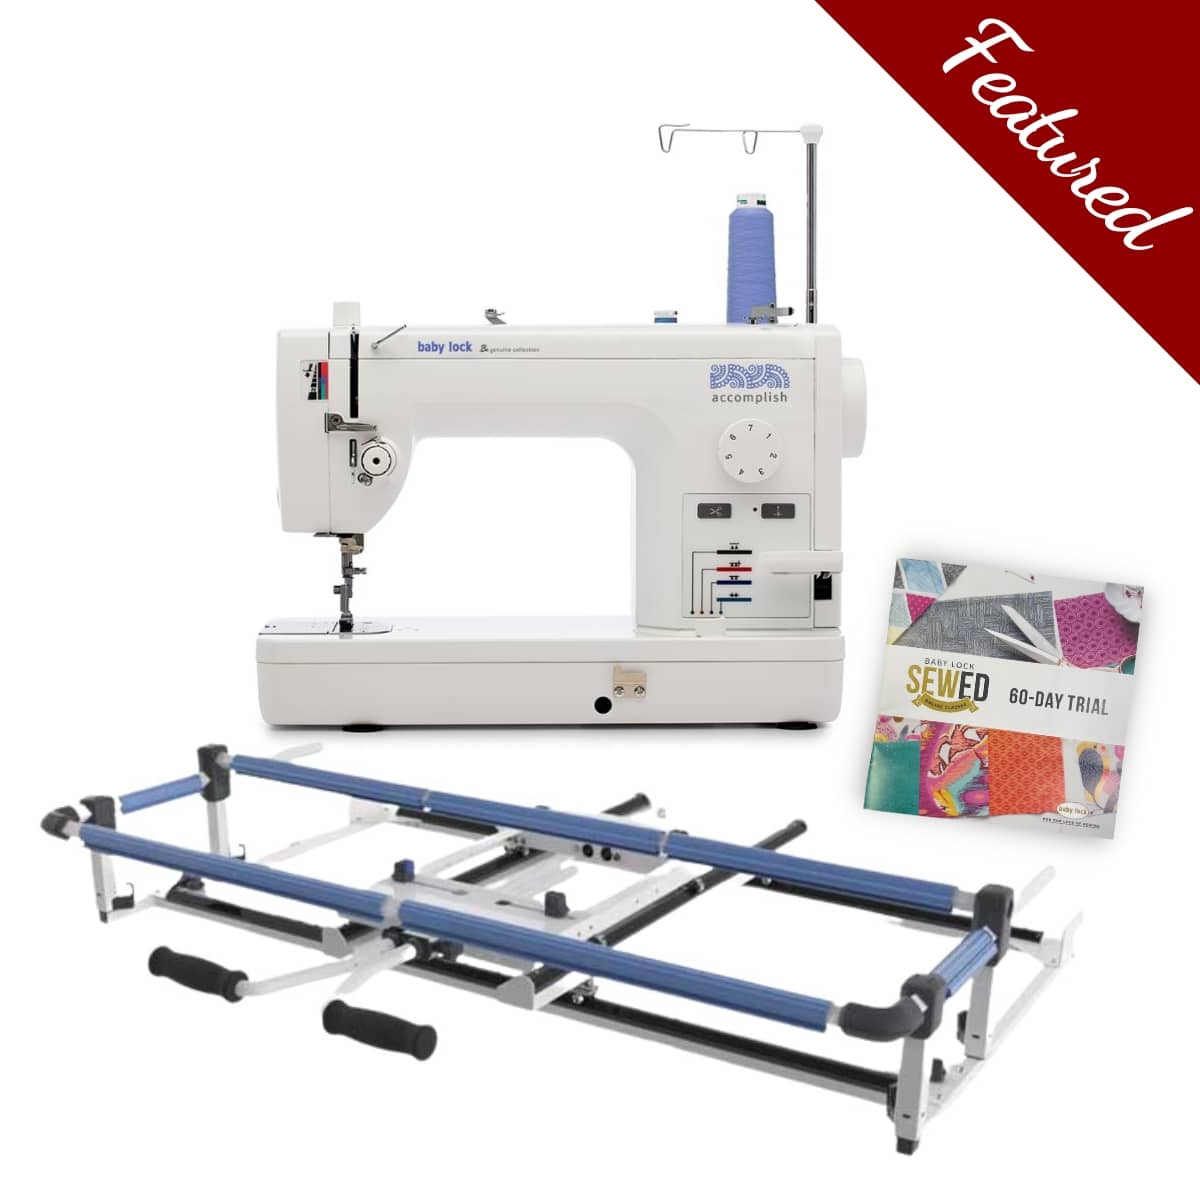 BabyLock Accomplish Sewing Machine - BL520B – The Sewing Studio